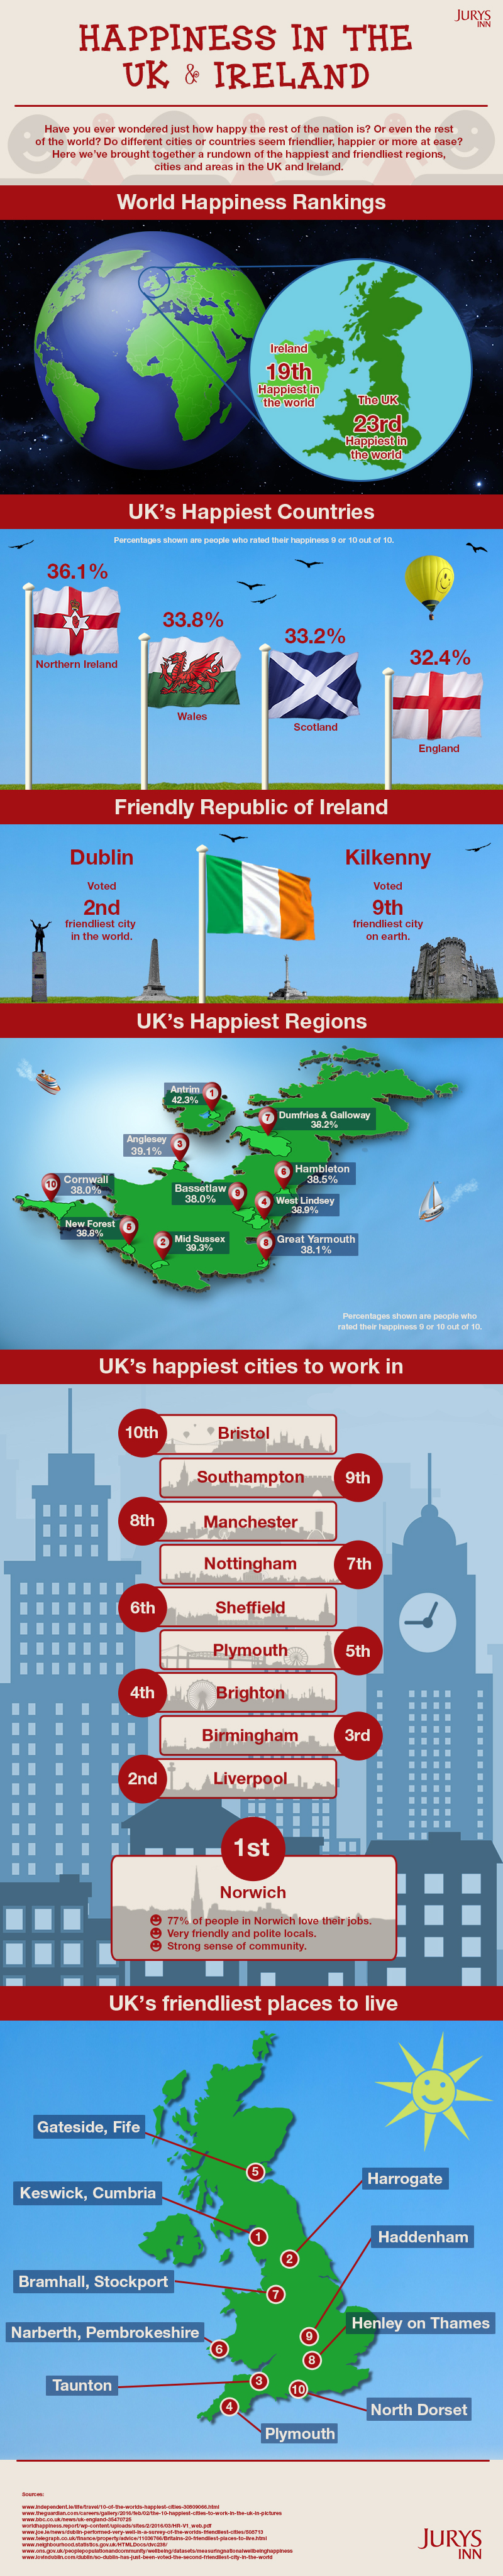 Happiness in the UK & Ireland